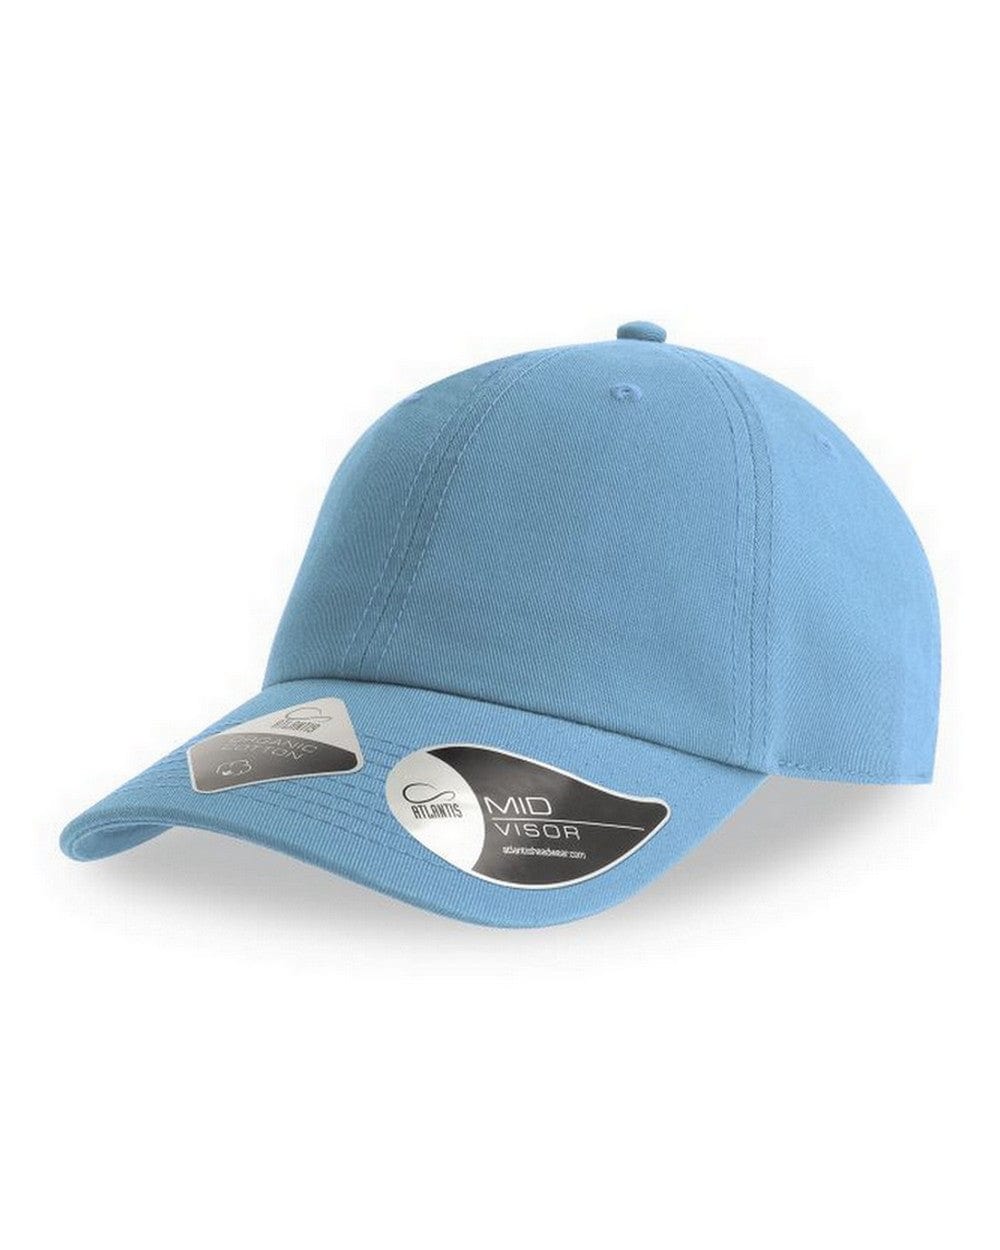 Atlantis Headwear Headwear Adjustable / Columbia Blue Atlantis Headwear - Sustainable Dad Hat